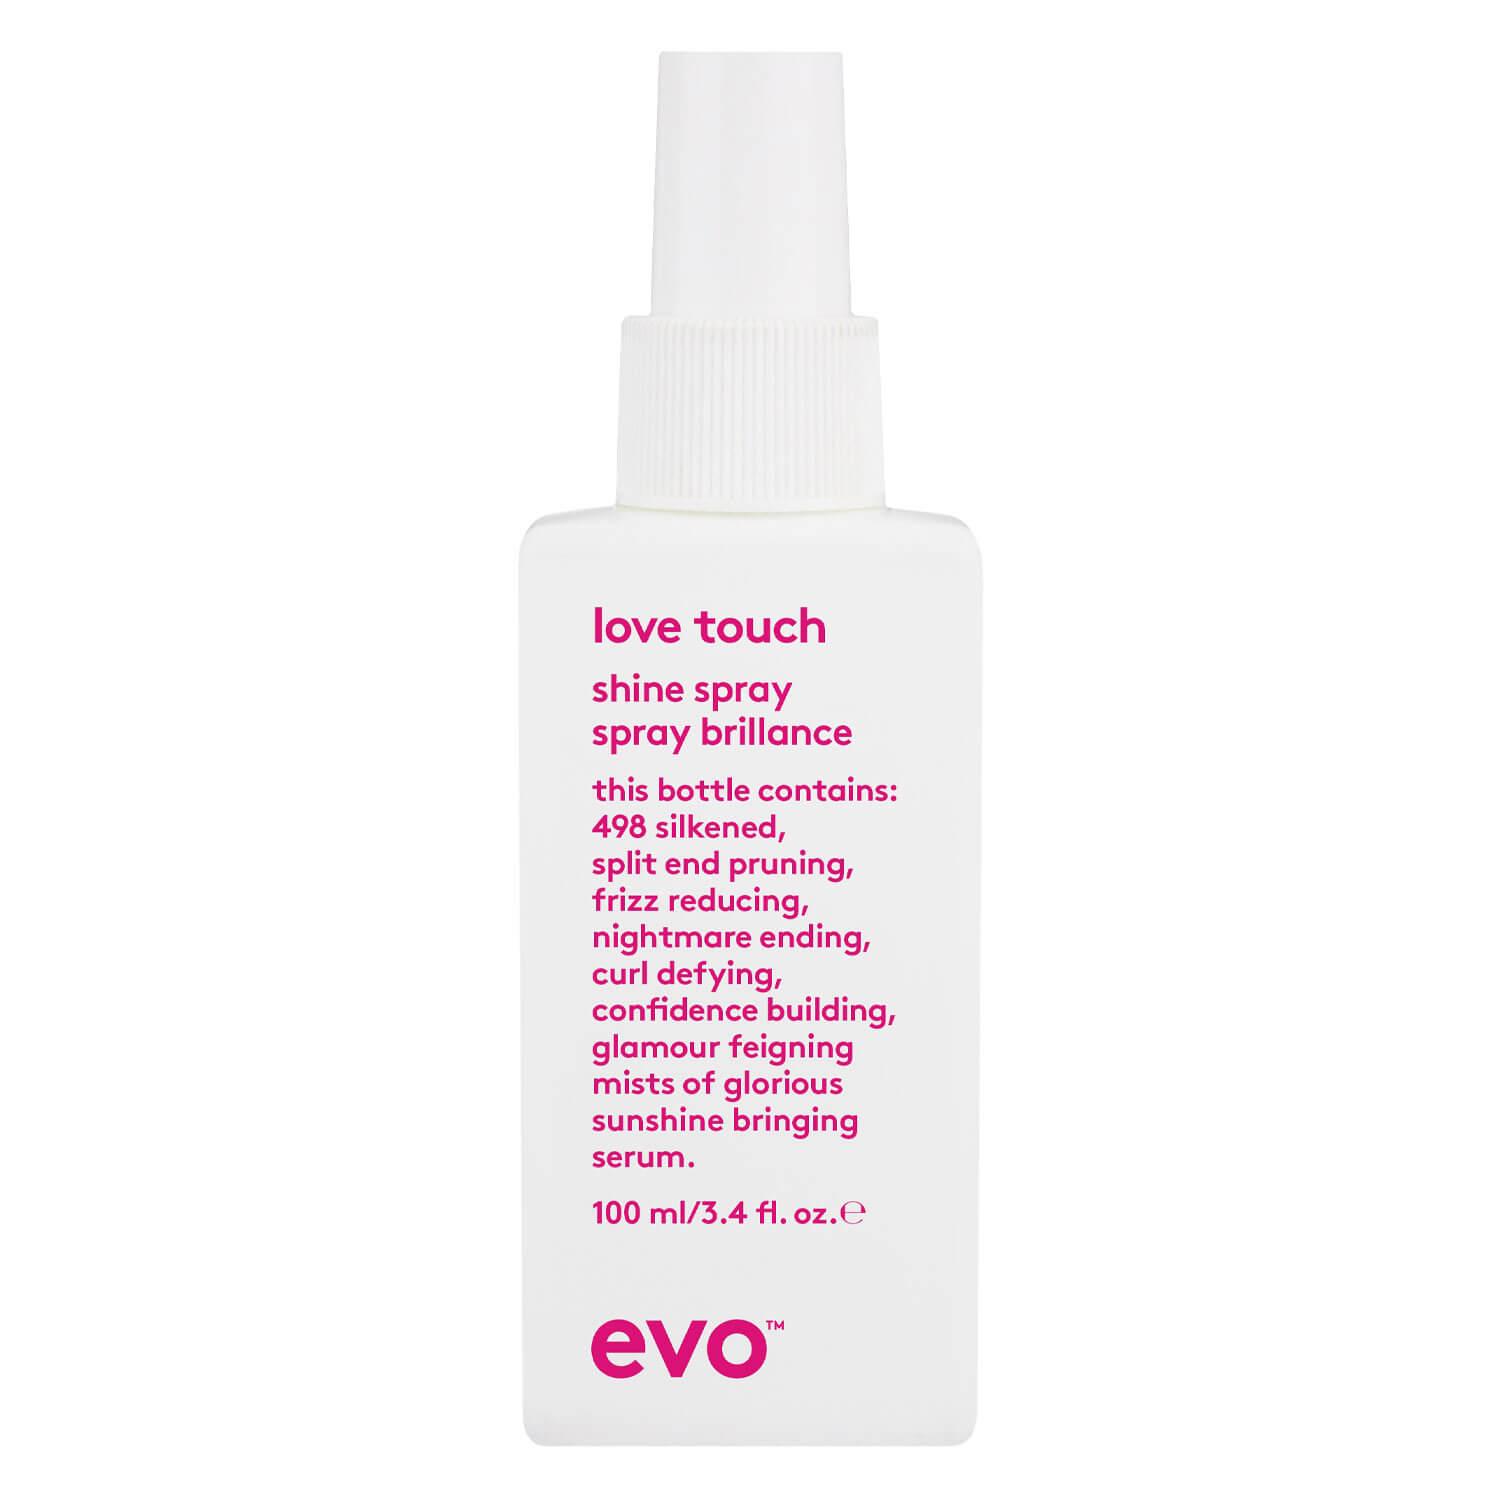 evo smooth - love touch shine spray